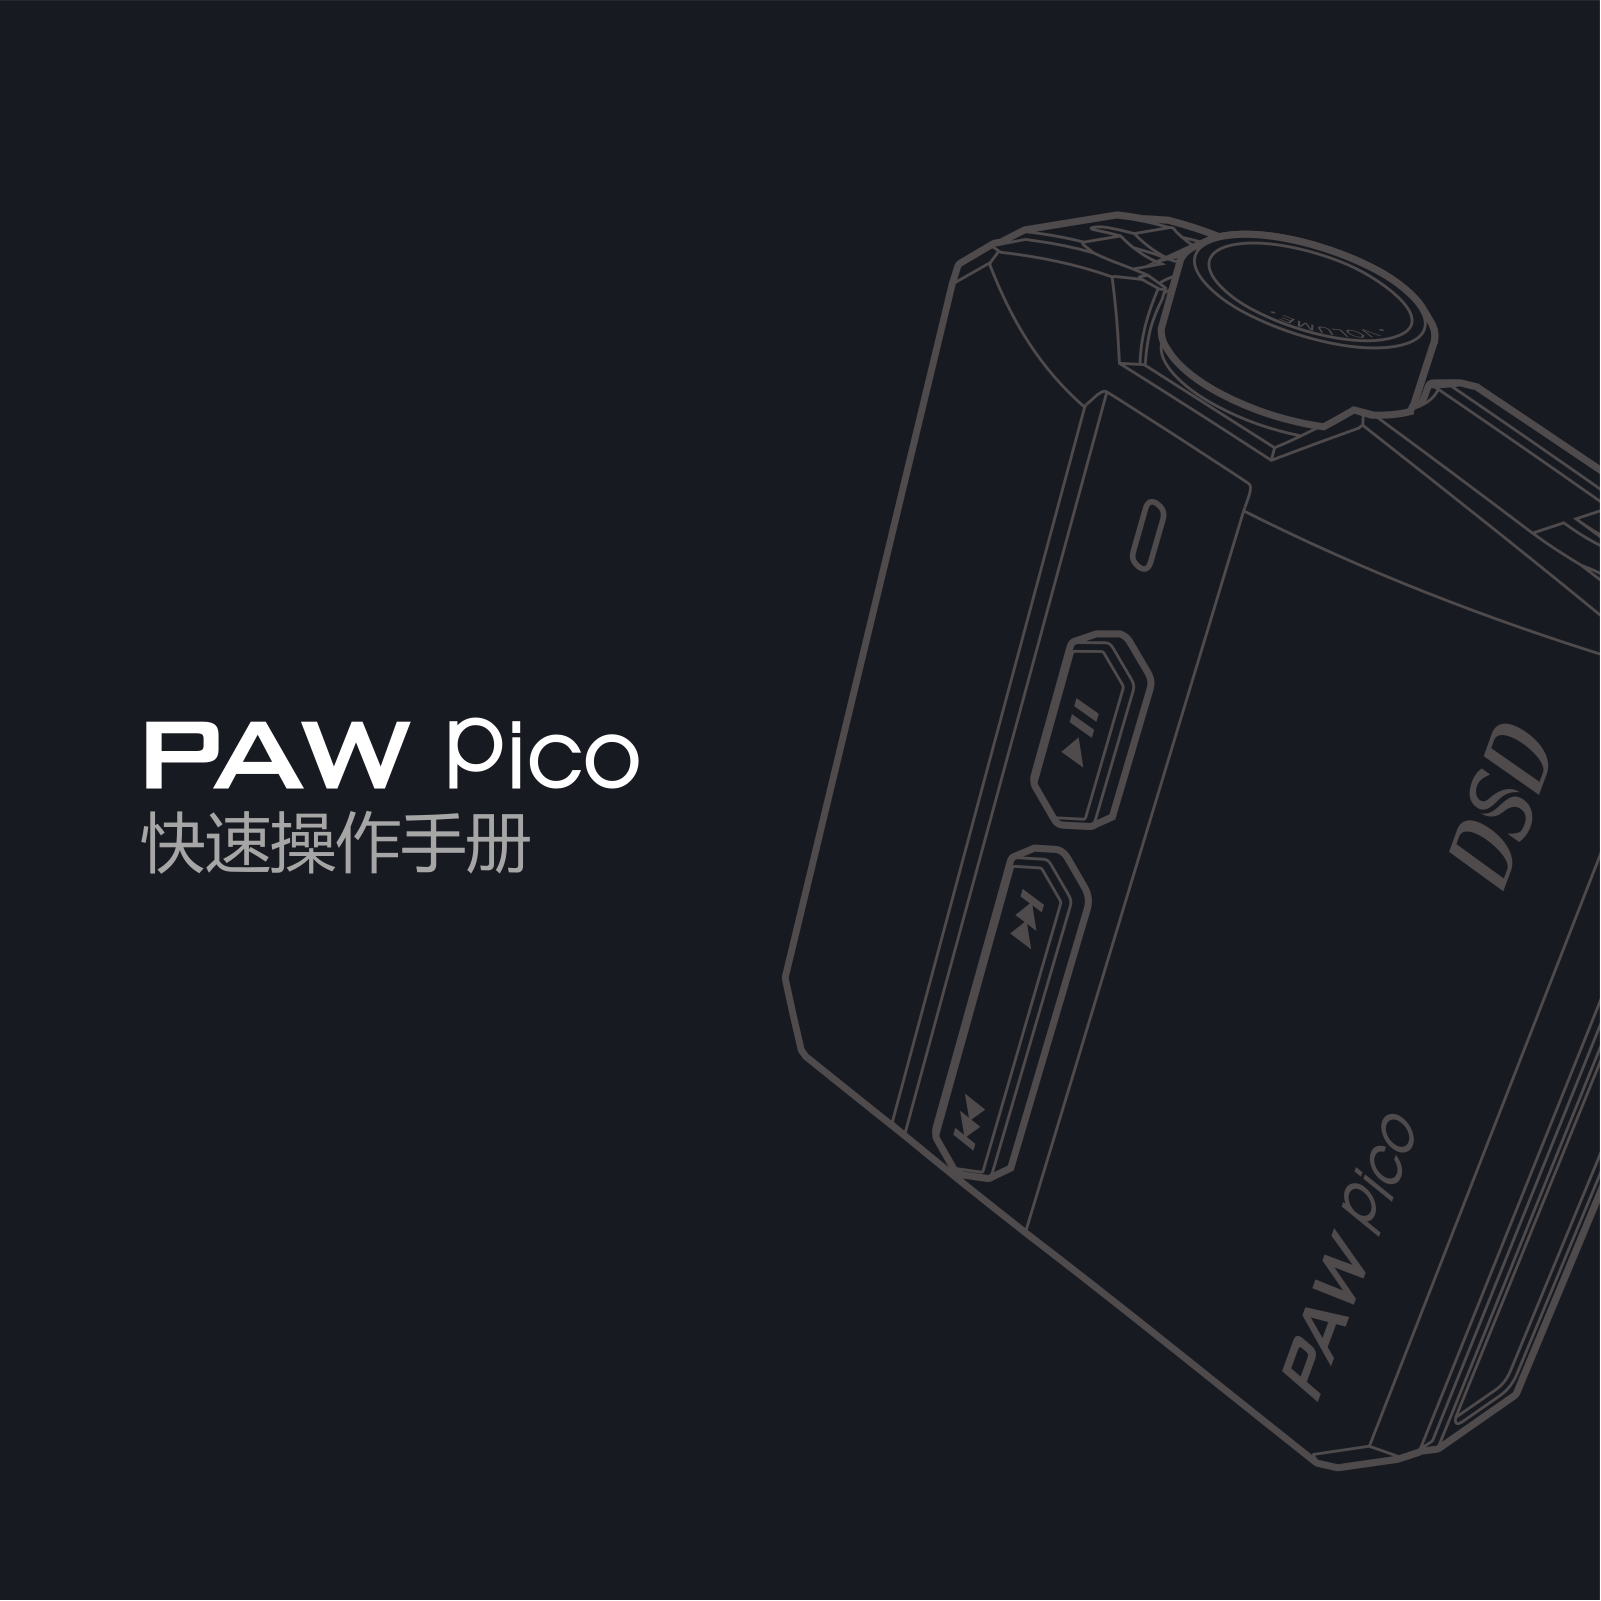 Lotoo PAW Pico User Manual